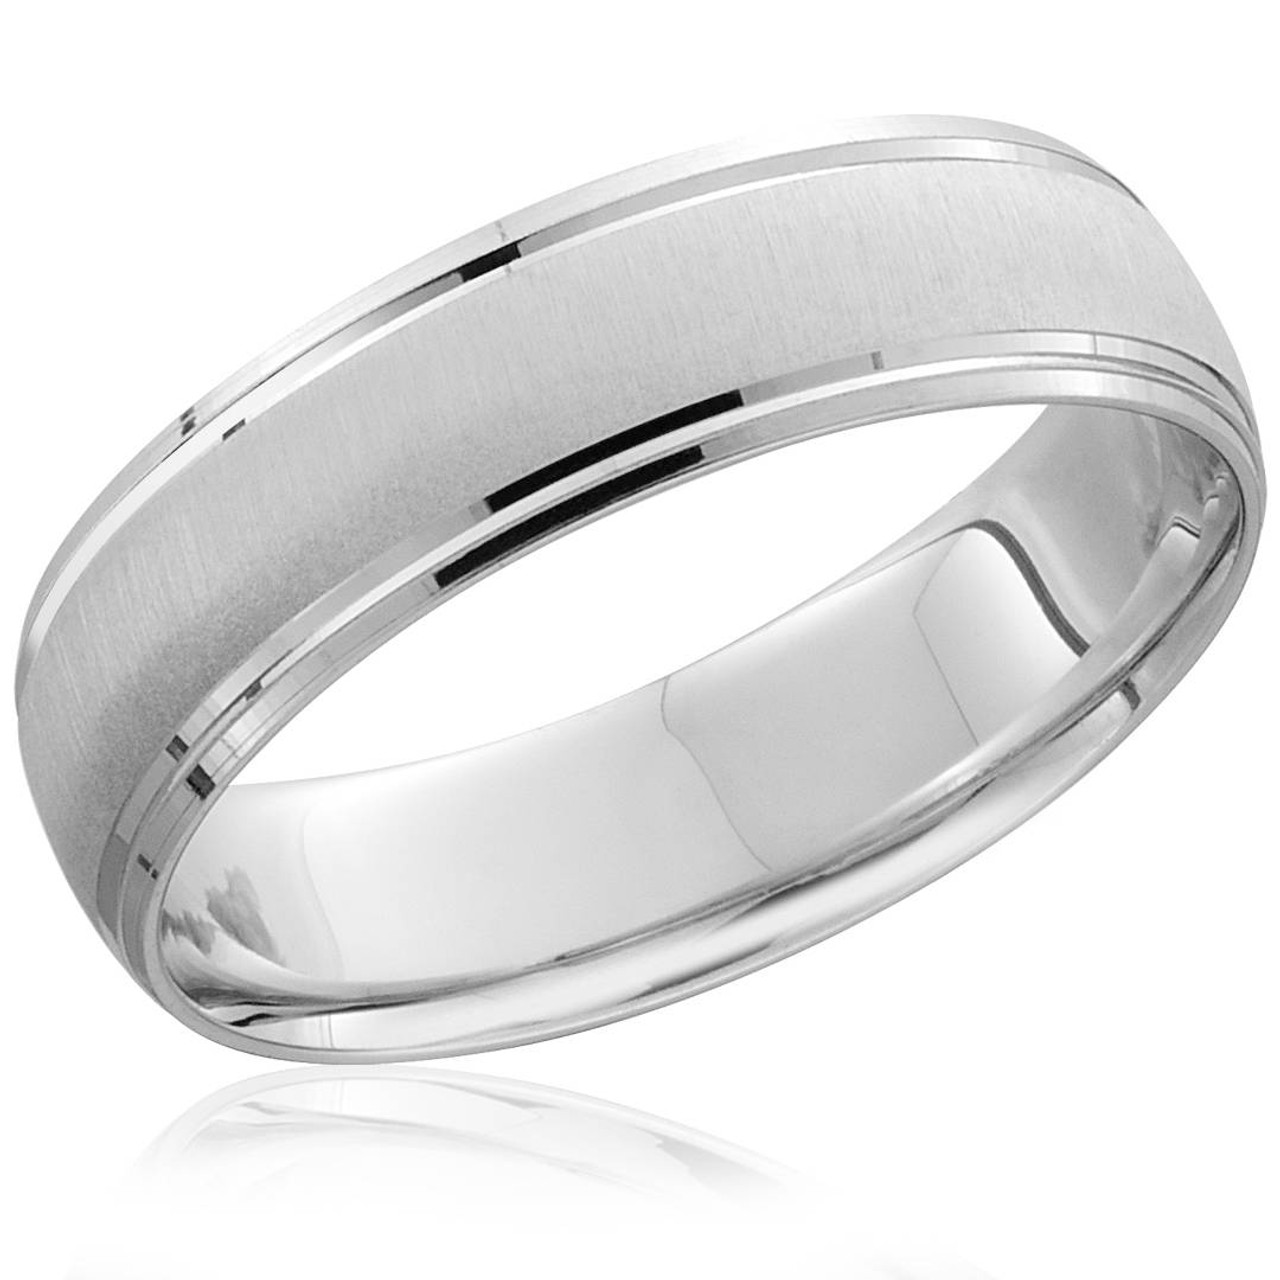 Braided Gold Wedding Ring In 950 Platinum